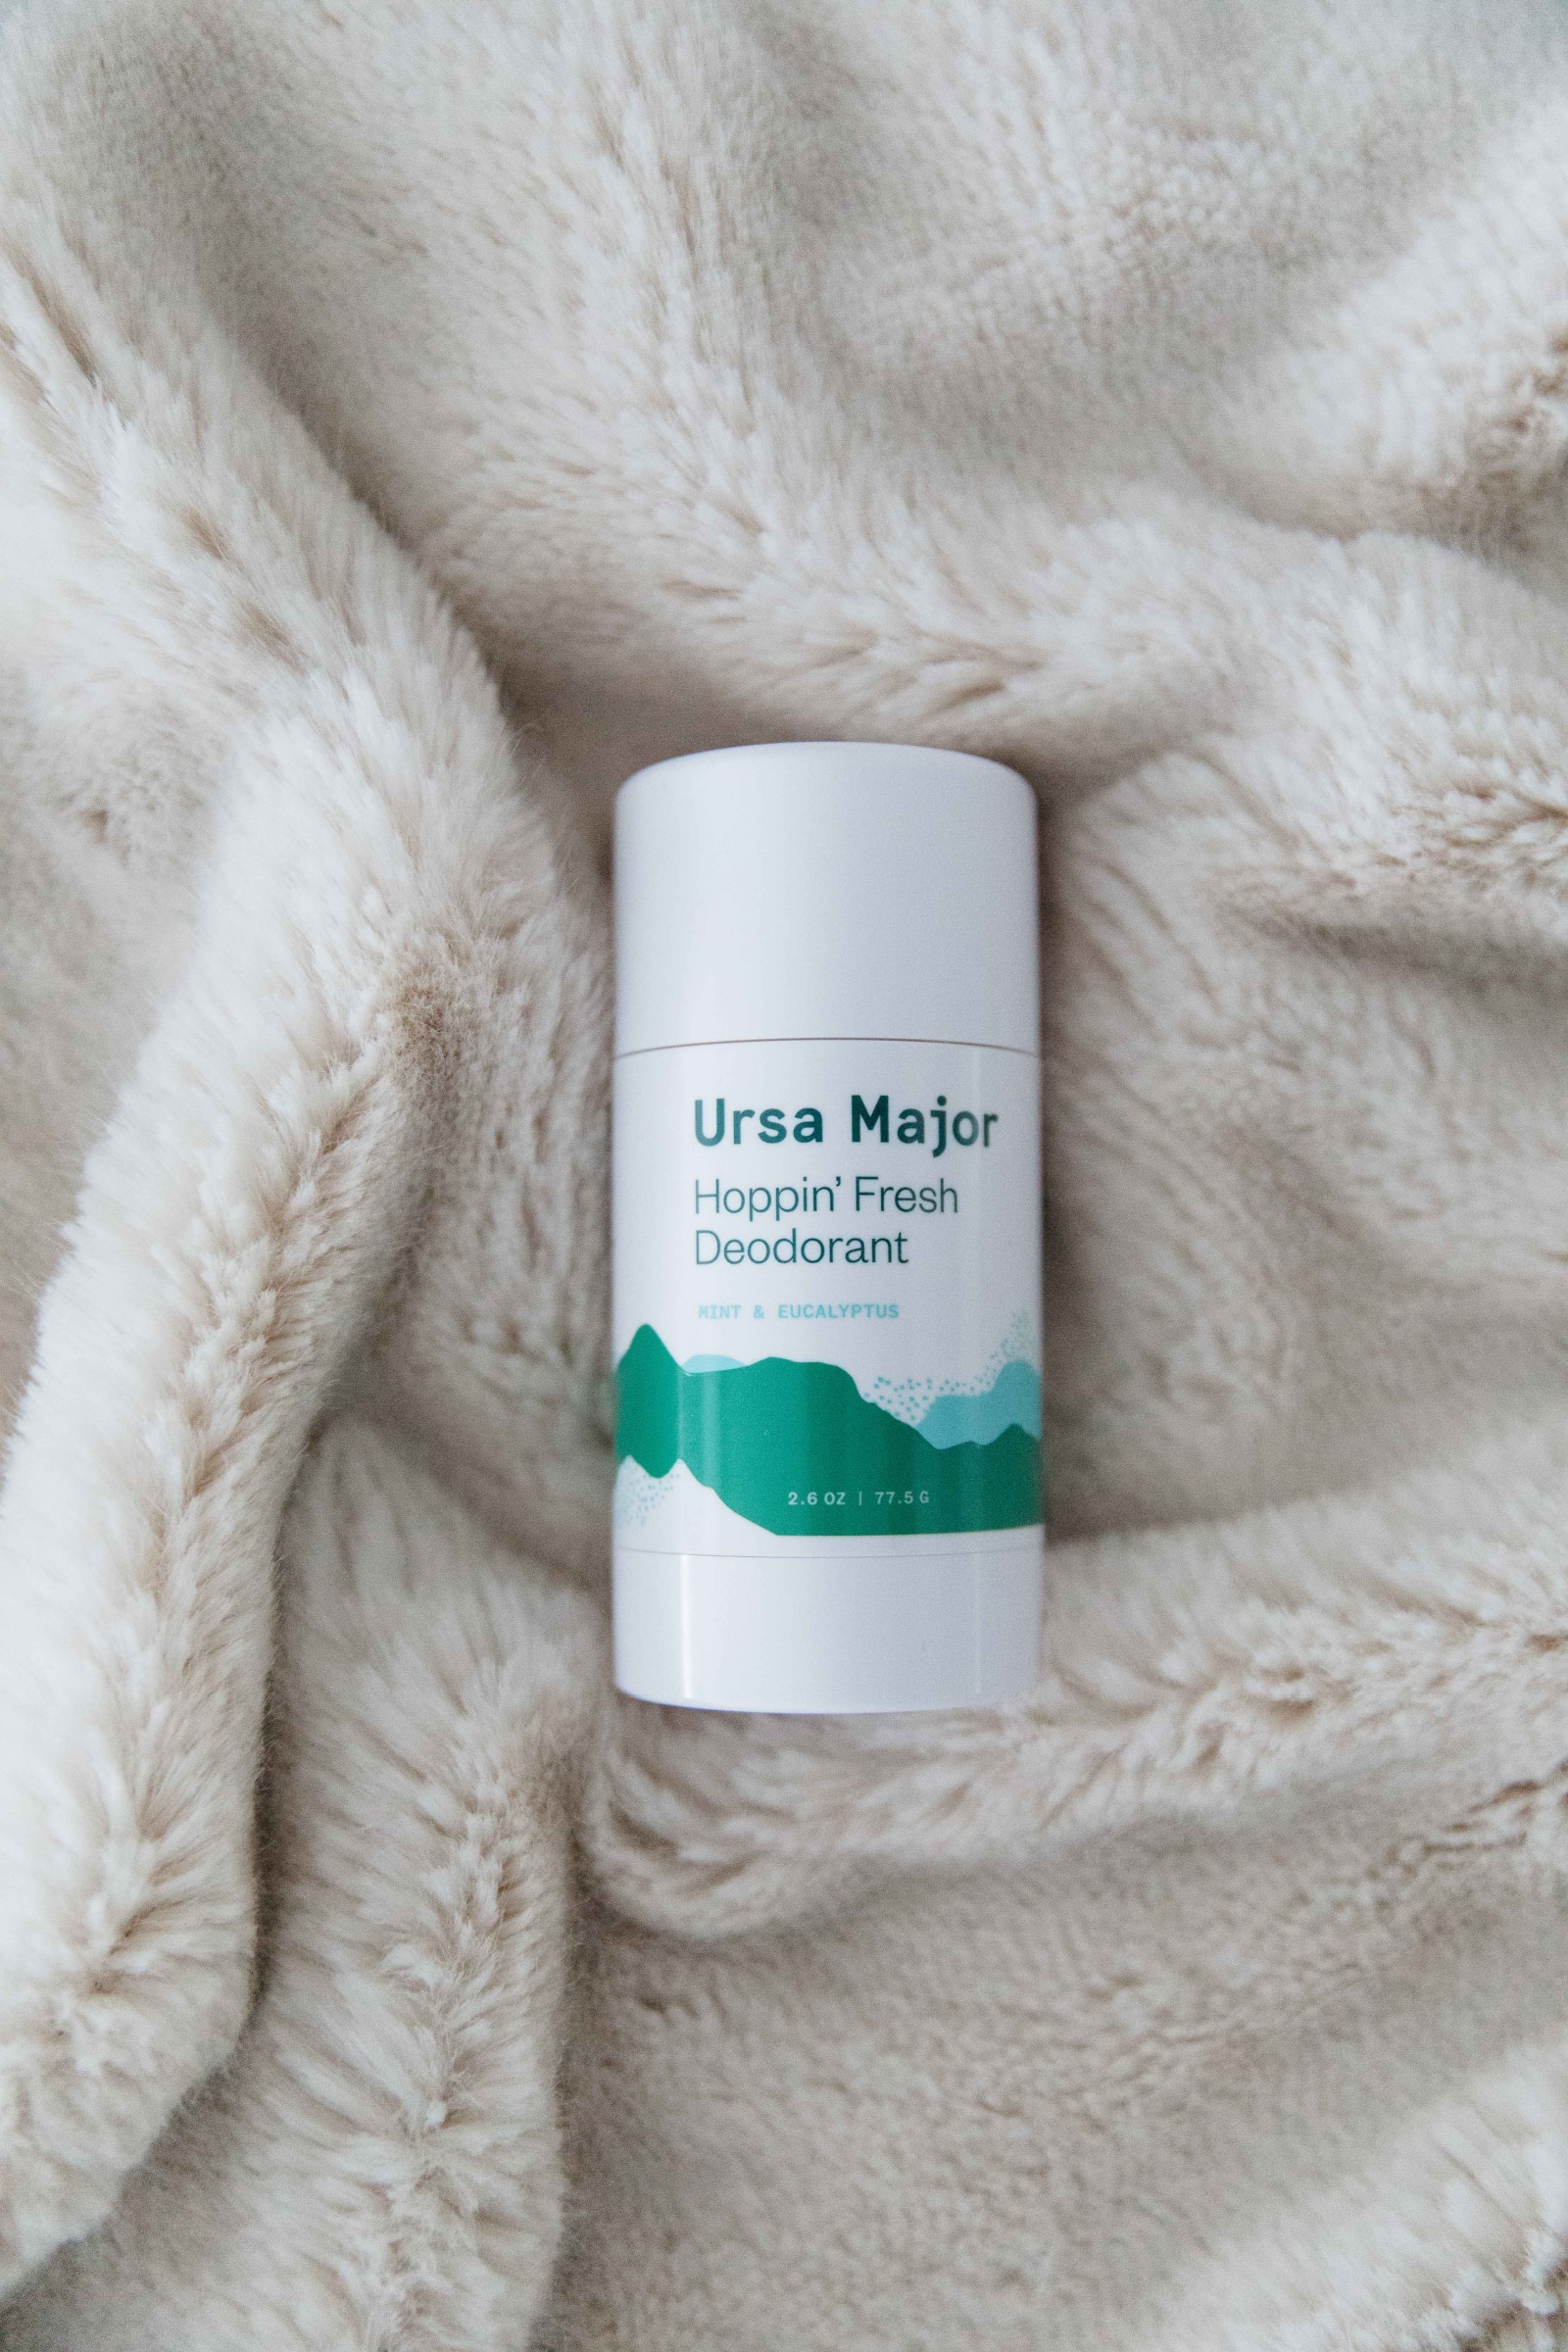 Ursa Major Hoppin' Fresh Deodorant | The Best Natural and Clean Deodorants